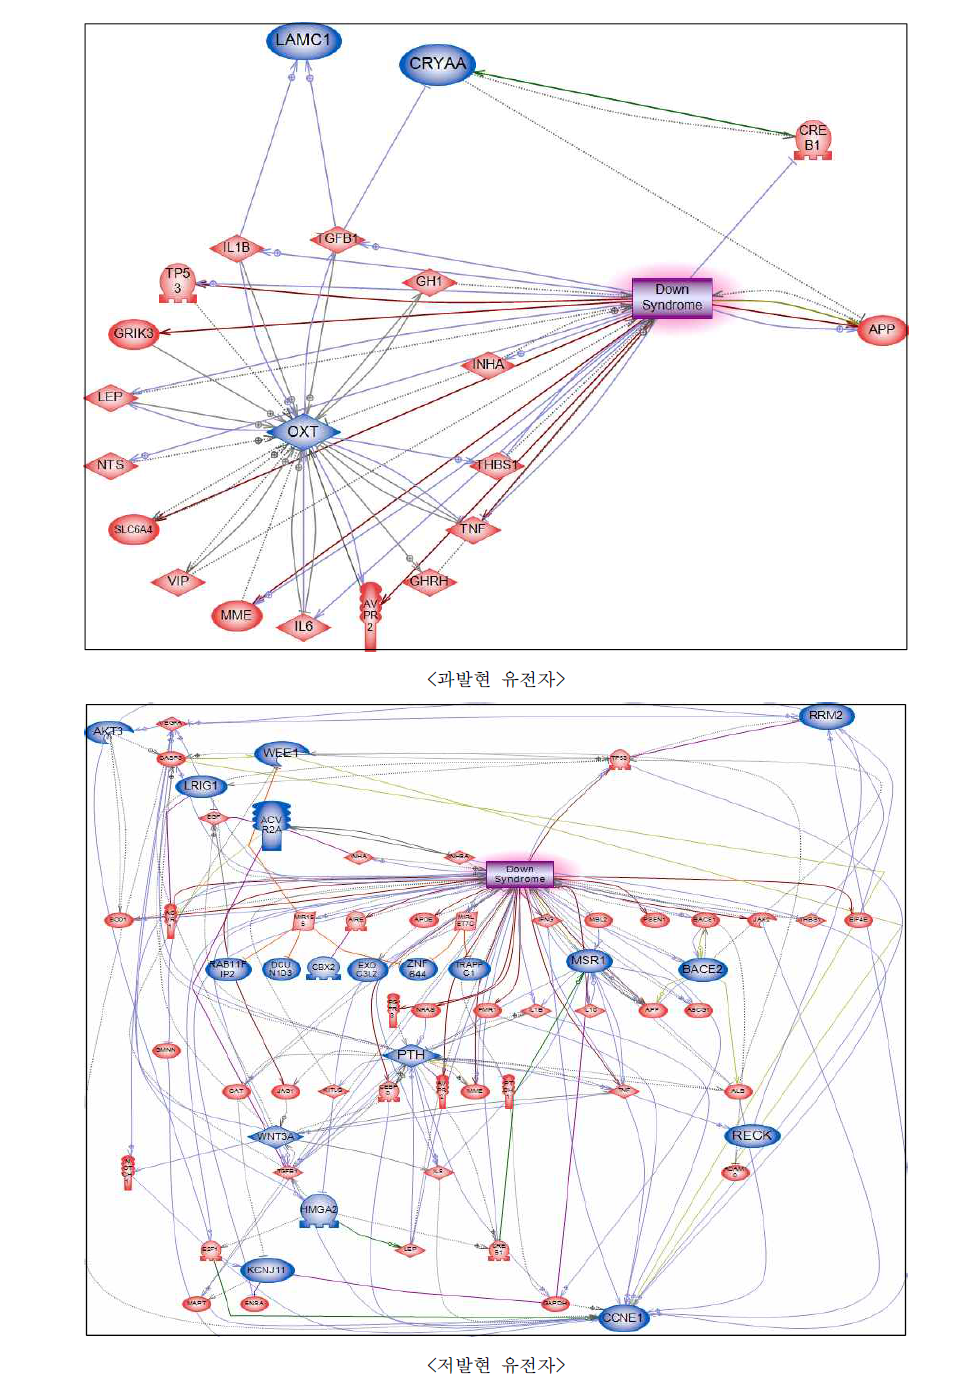 Candidate gene을 이용한 다운증후군에 대한 네트워크 구축